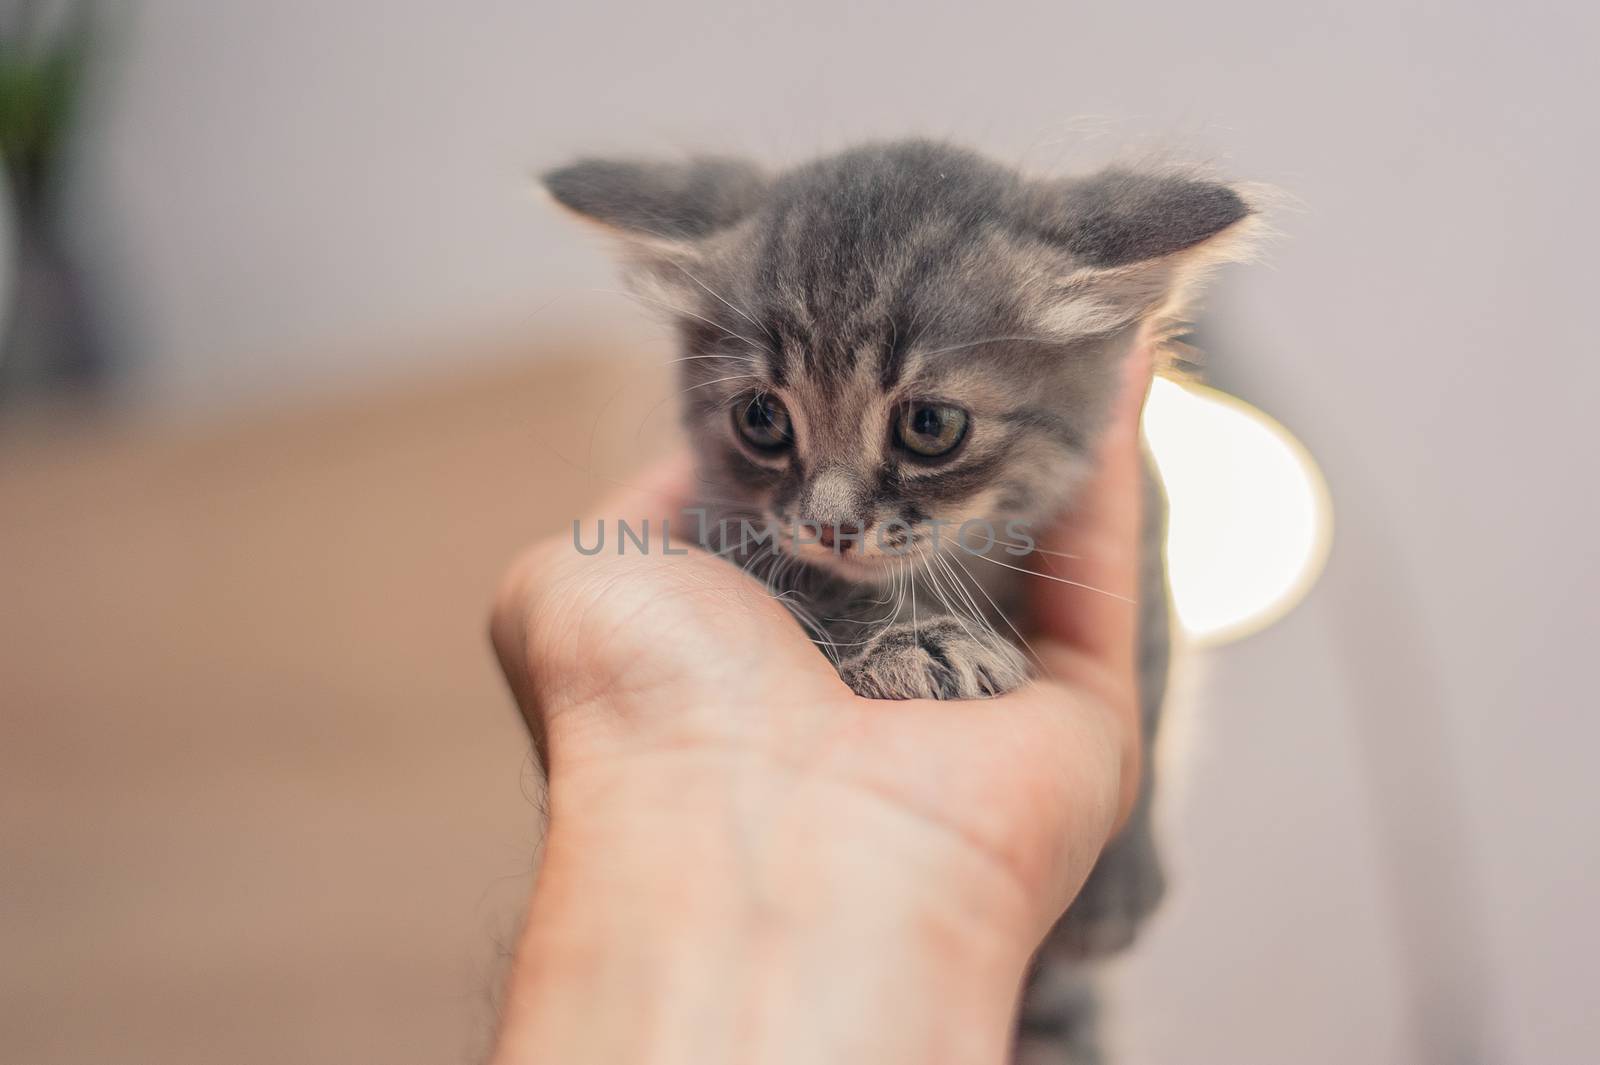 little cute gray kitten on the hand by chernobrovin